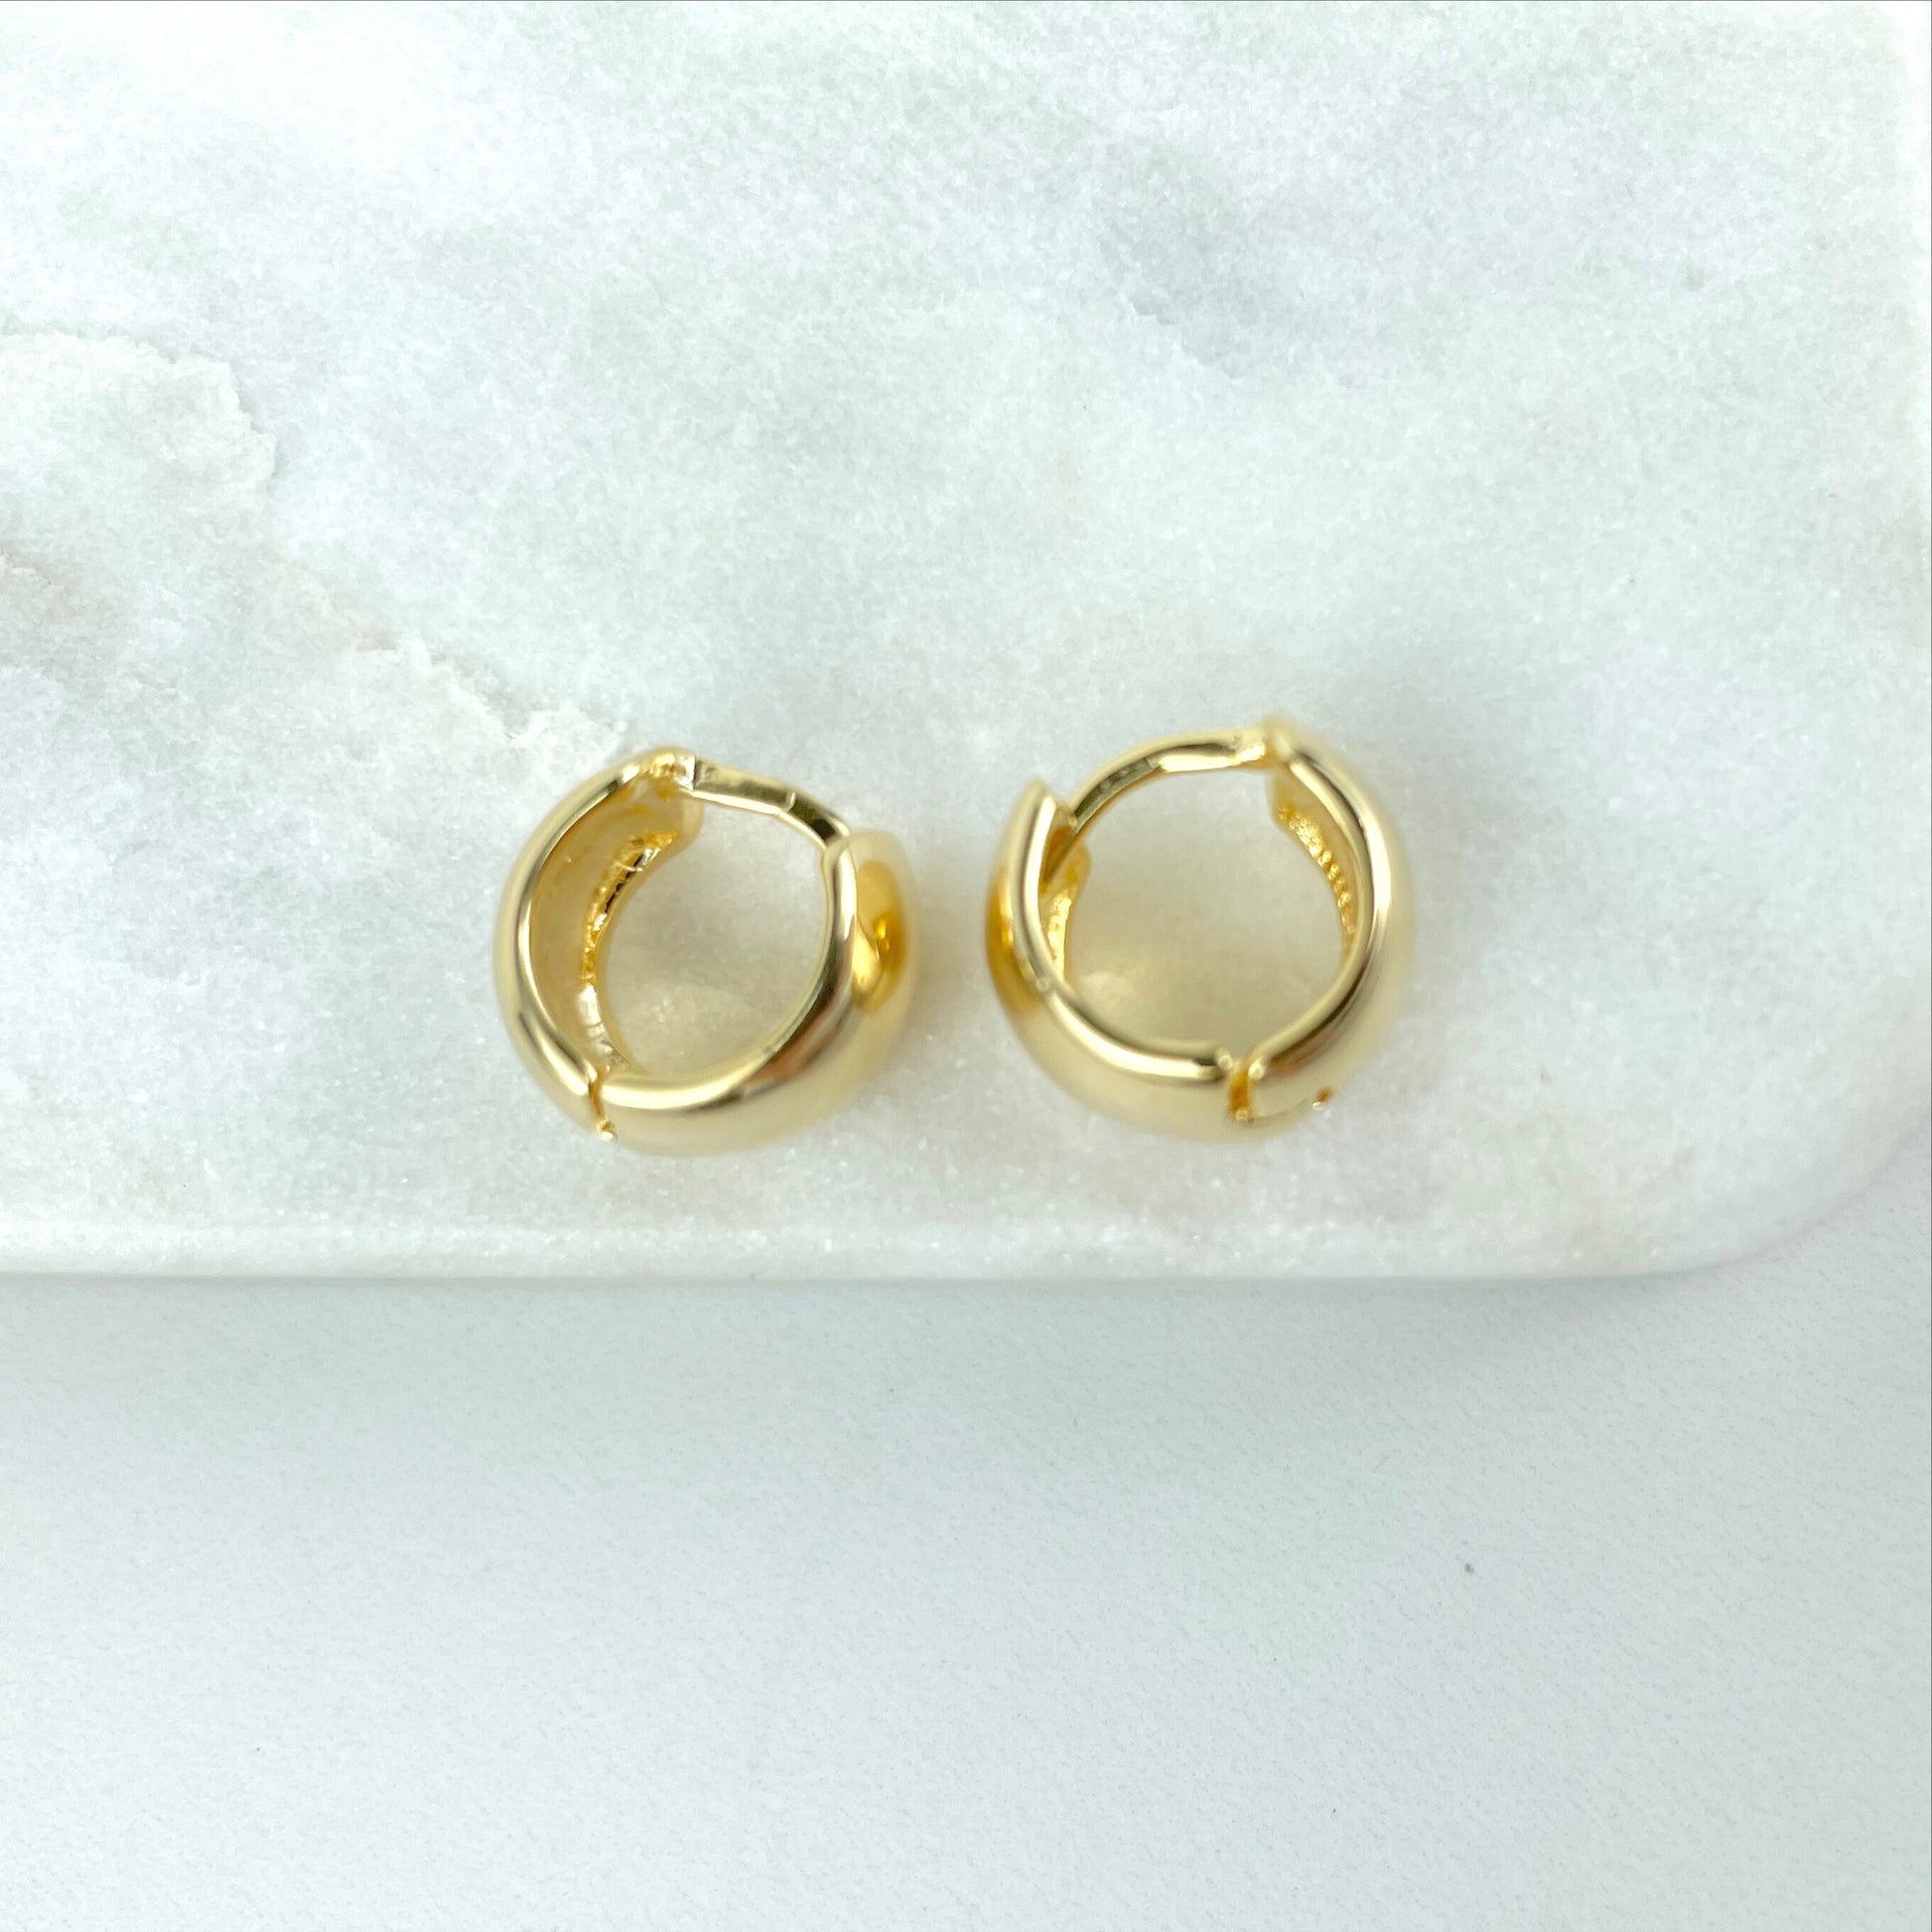 18k Gold Filled 15mm Petite Clicker Earrings Huggies Gold Hoops Dainty Wholesale Jewelry Making Supplies